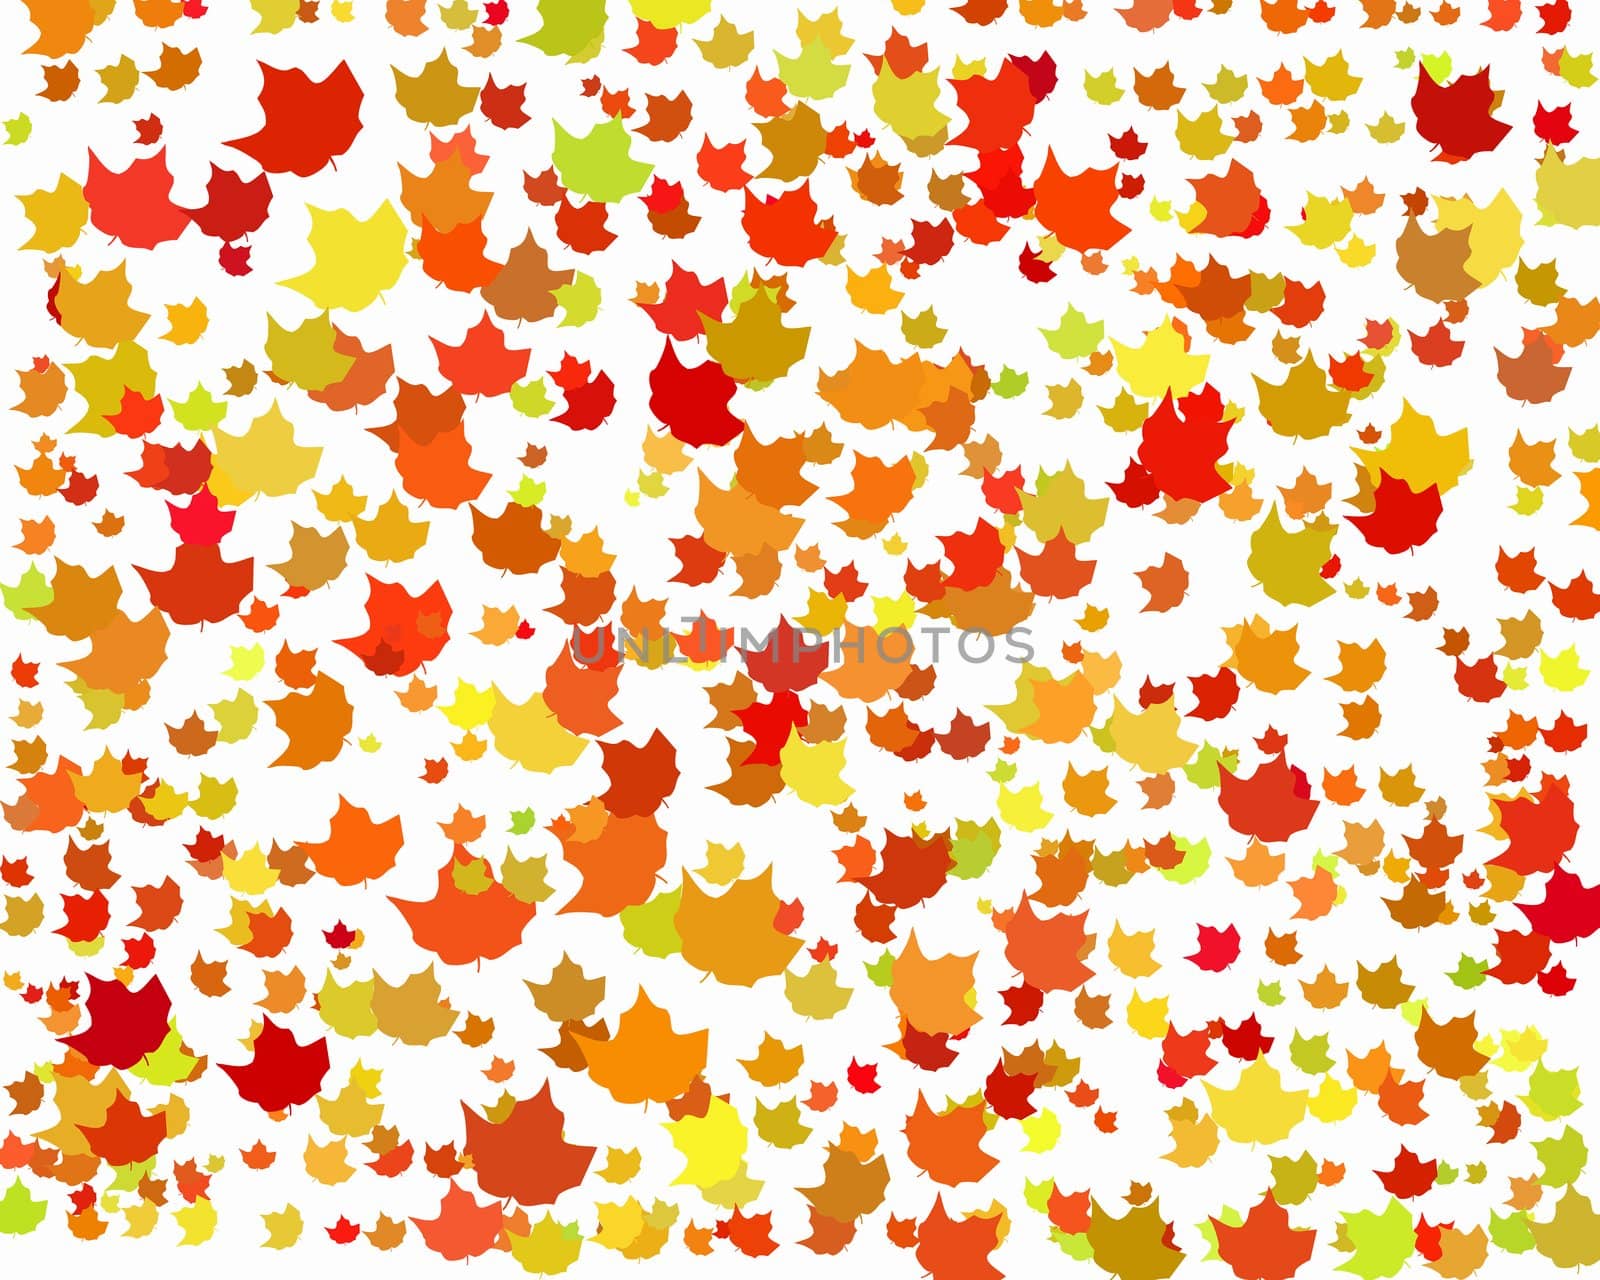 Digital Autumn Background by sacatani